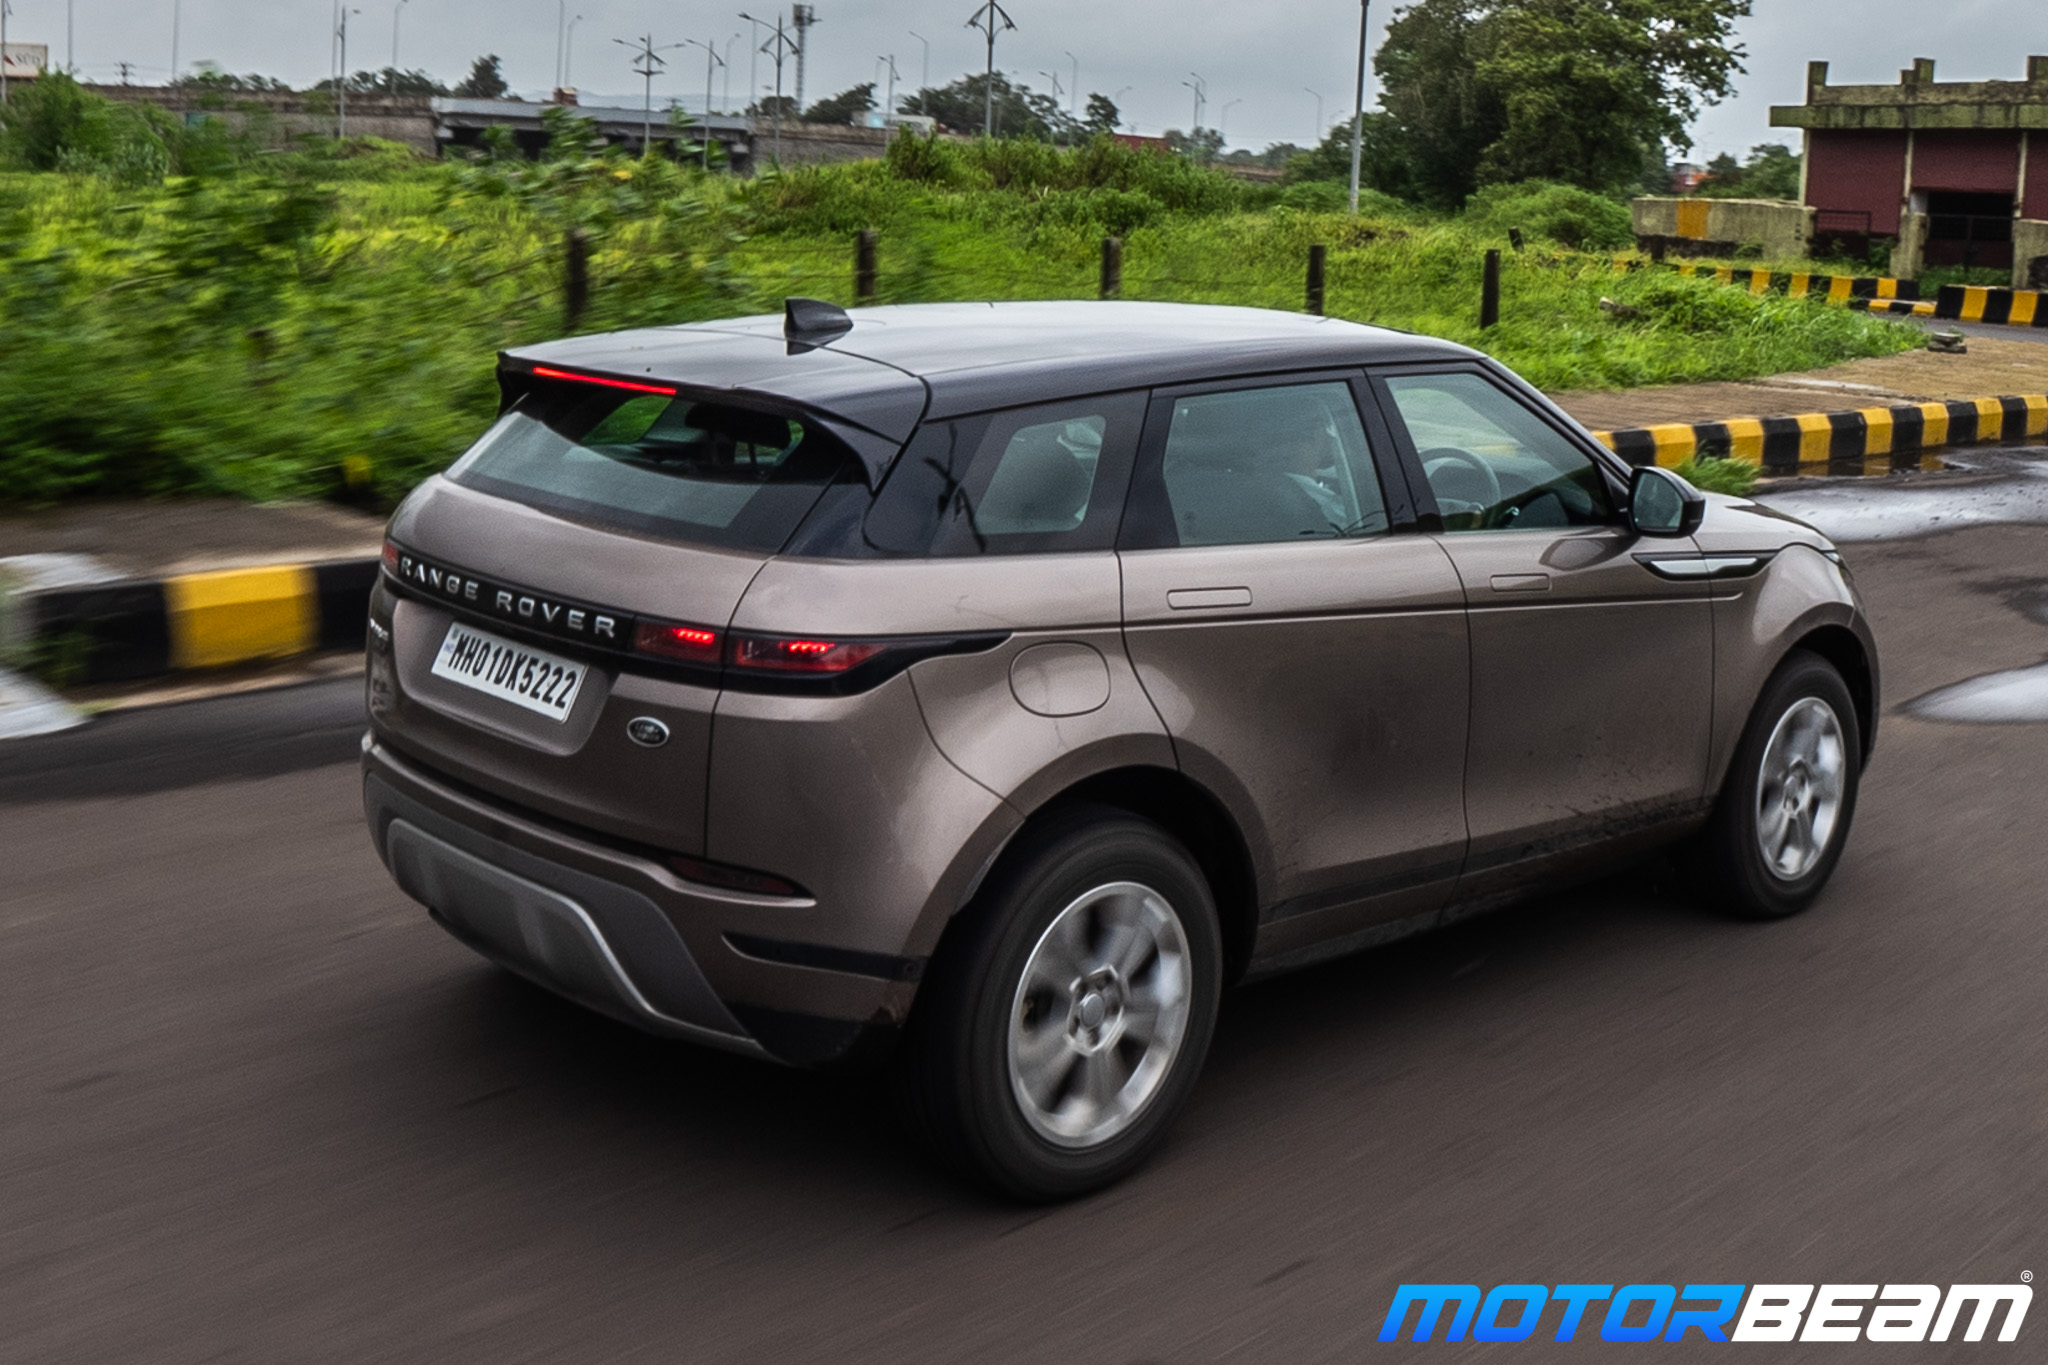 2020 Land Rover Range Rover Evoque Review - Autotrader